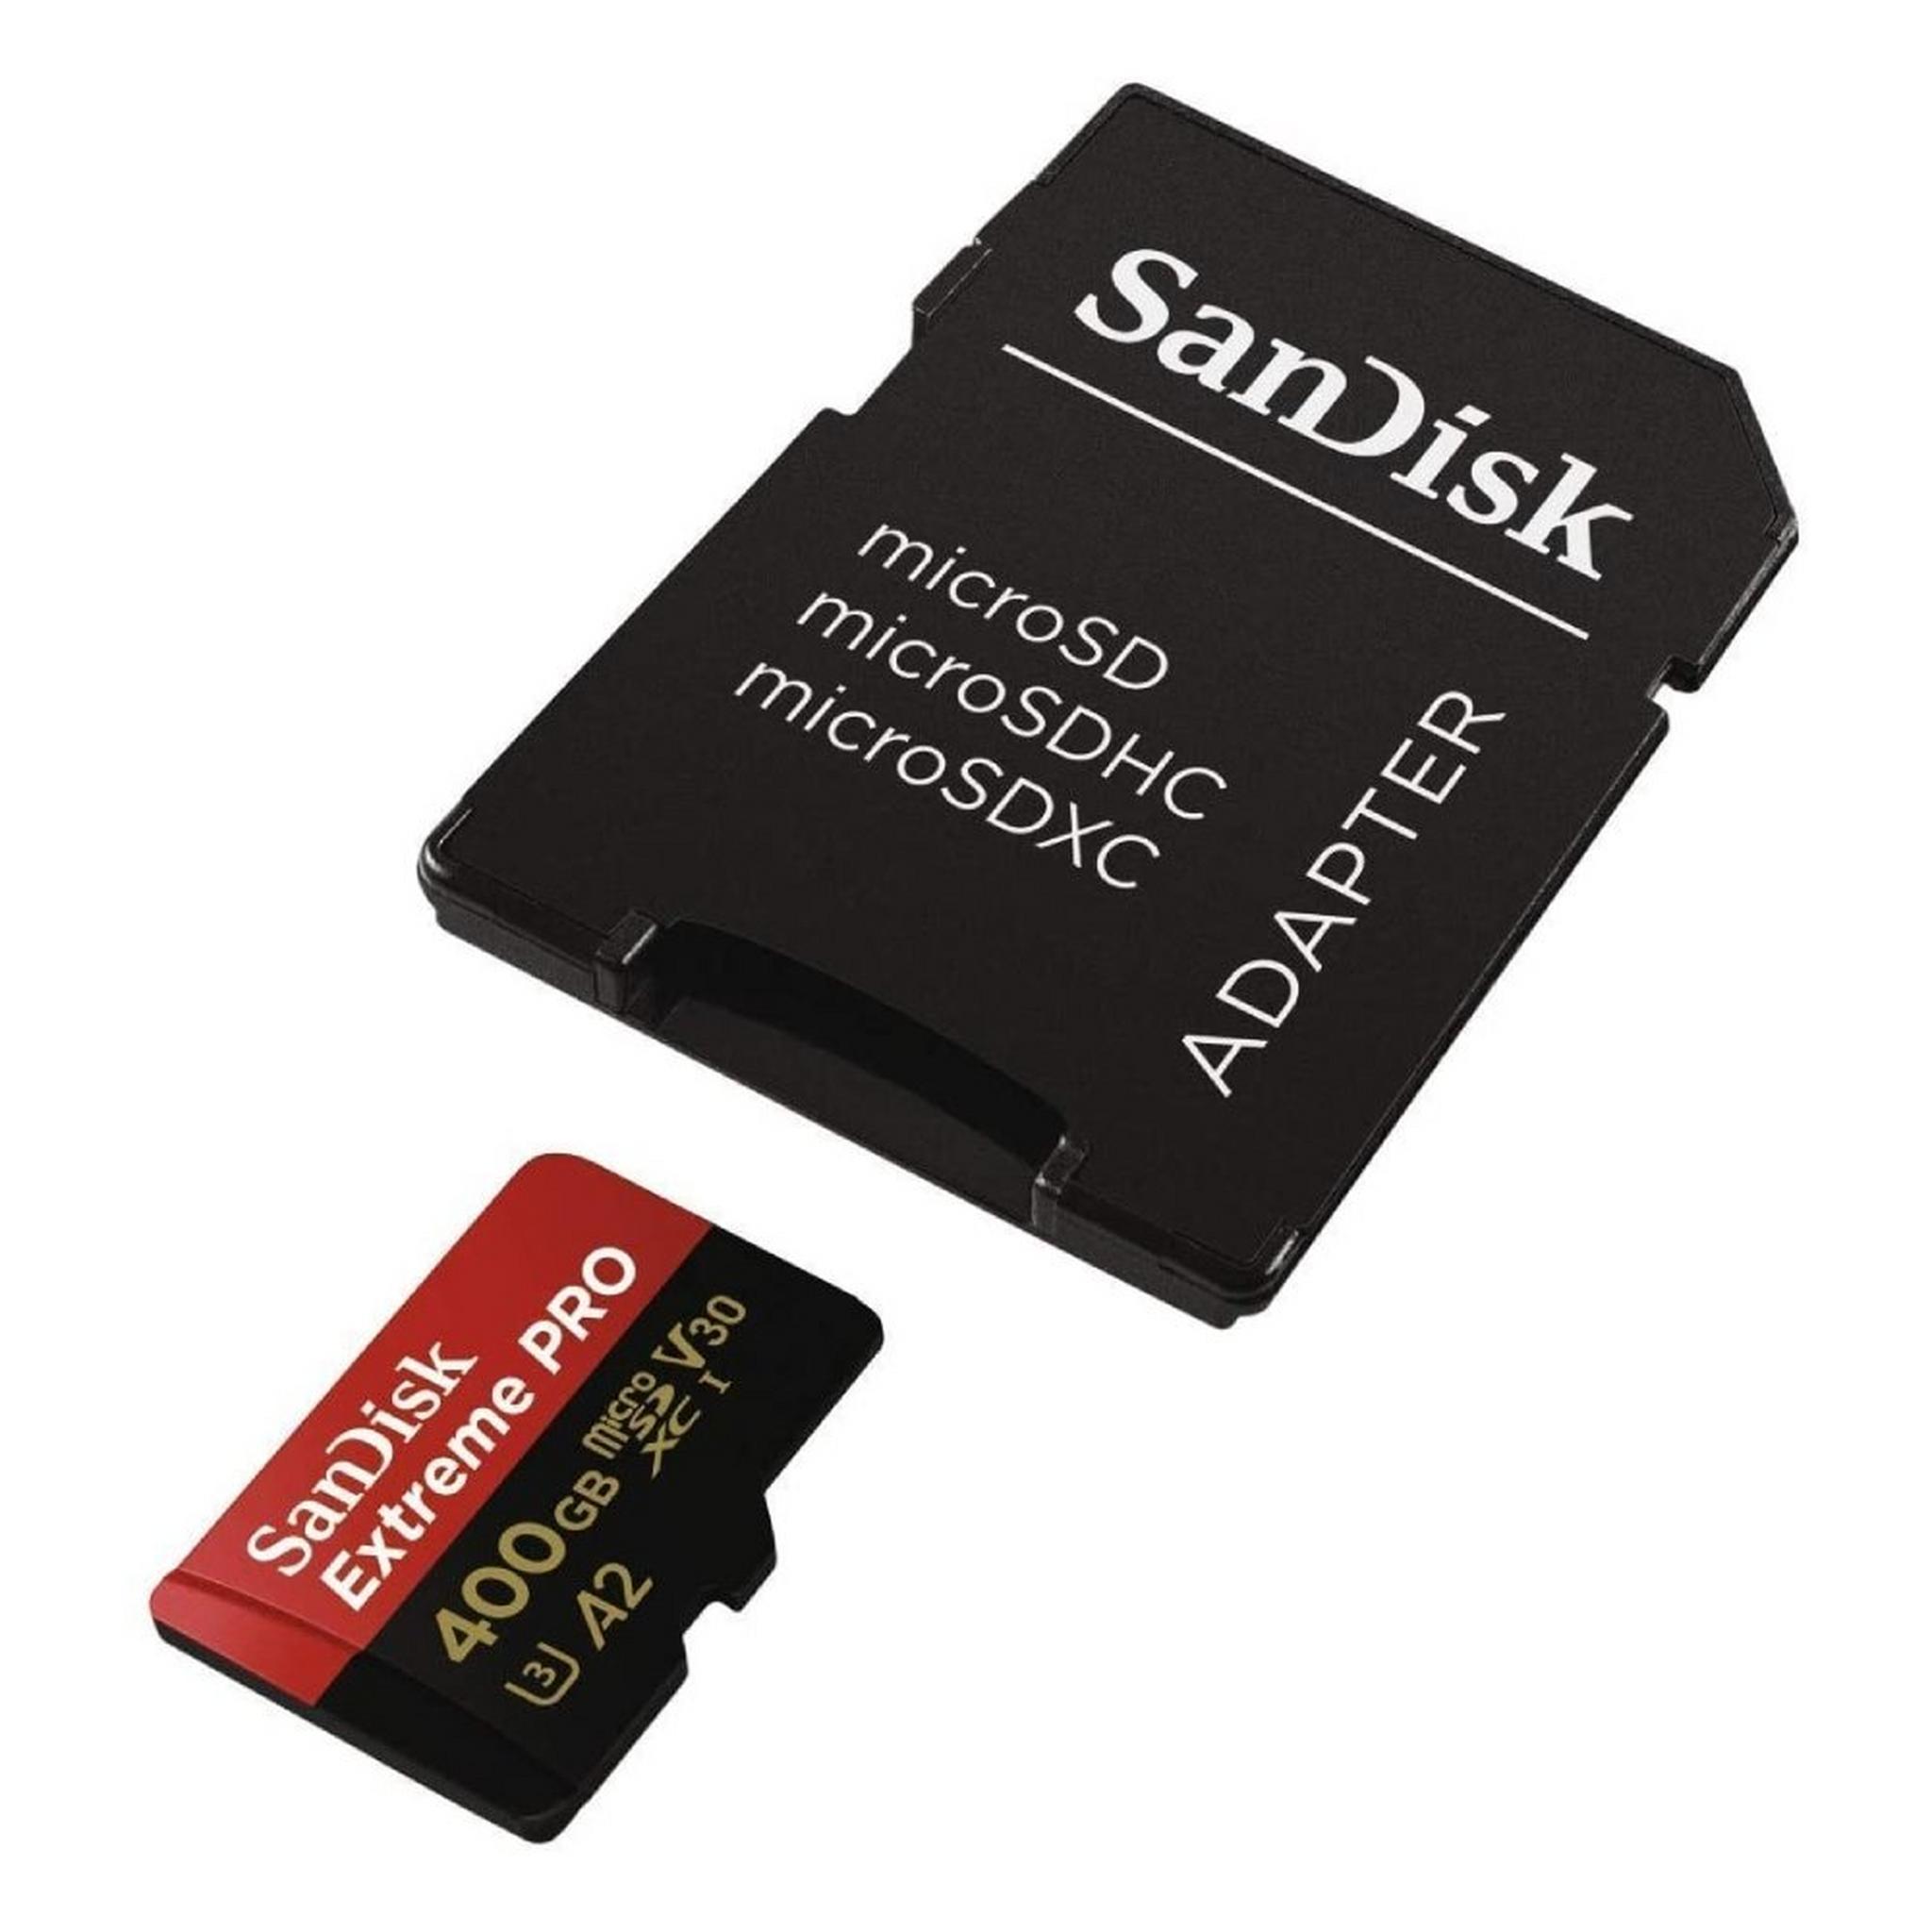 SanDisk Extreme Pro 400GB MicroSDXC UHS-I Memory Card + MicroSD Adapter